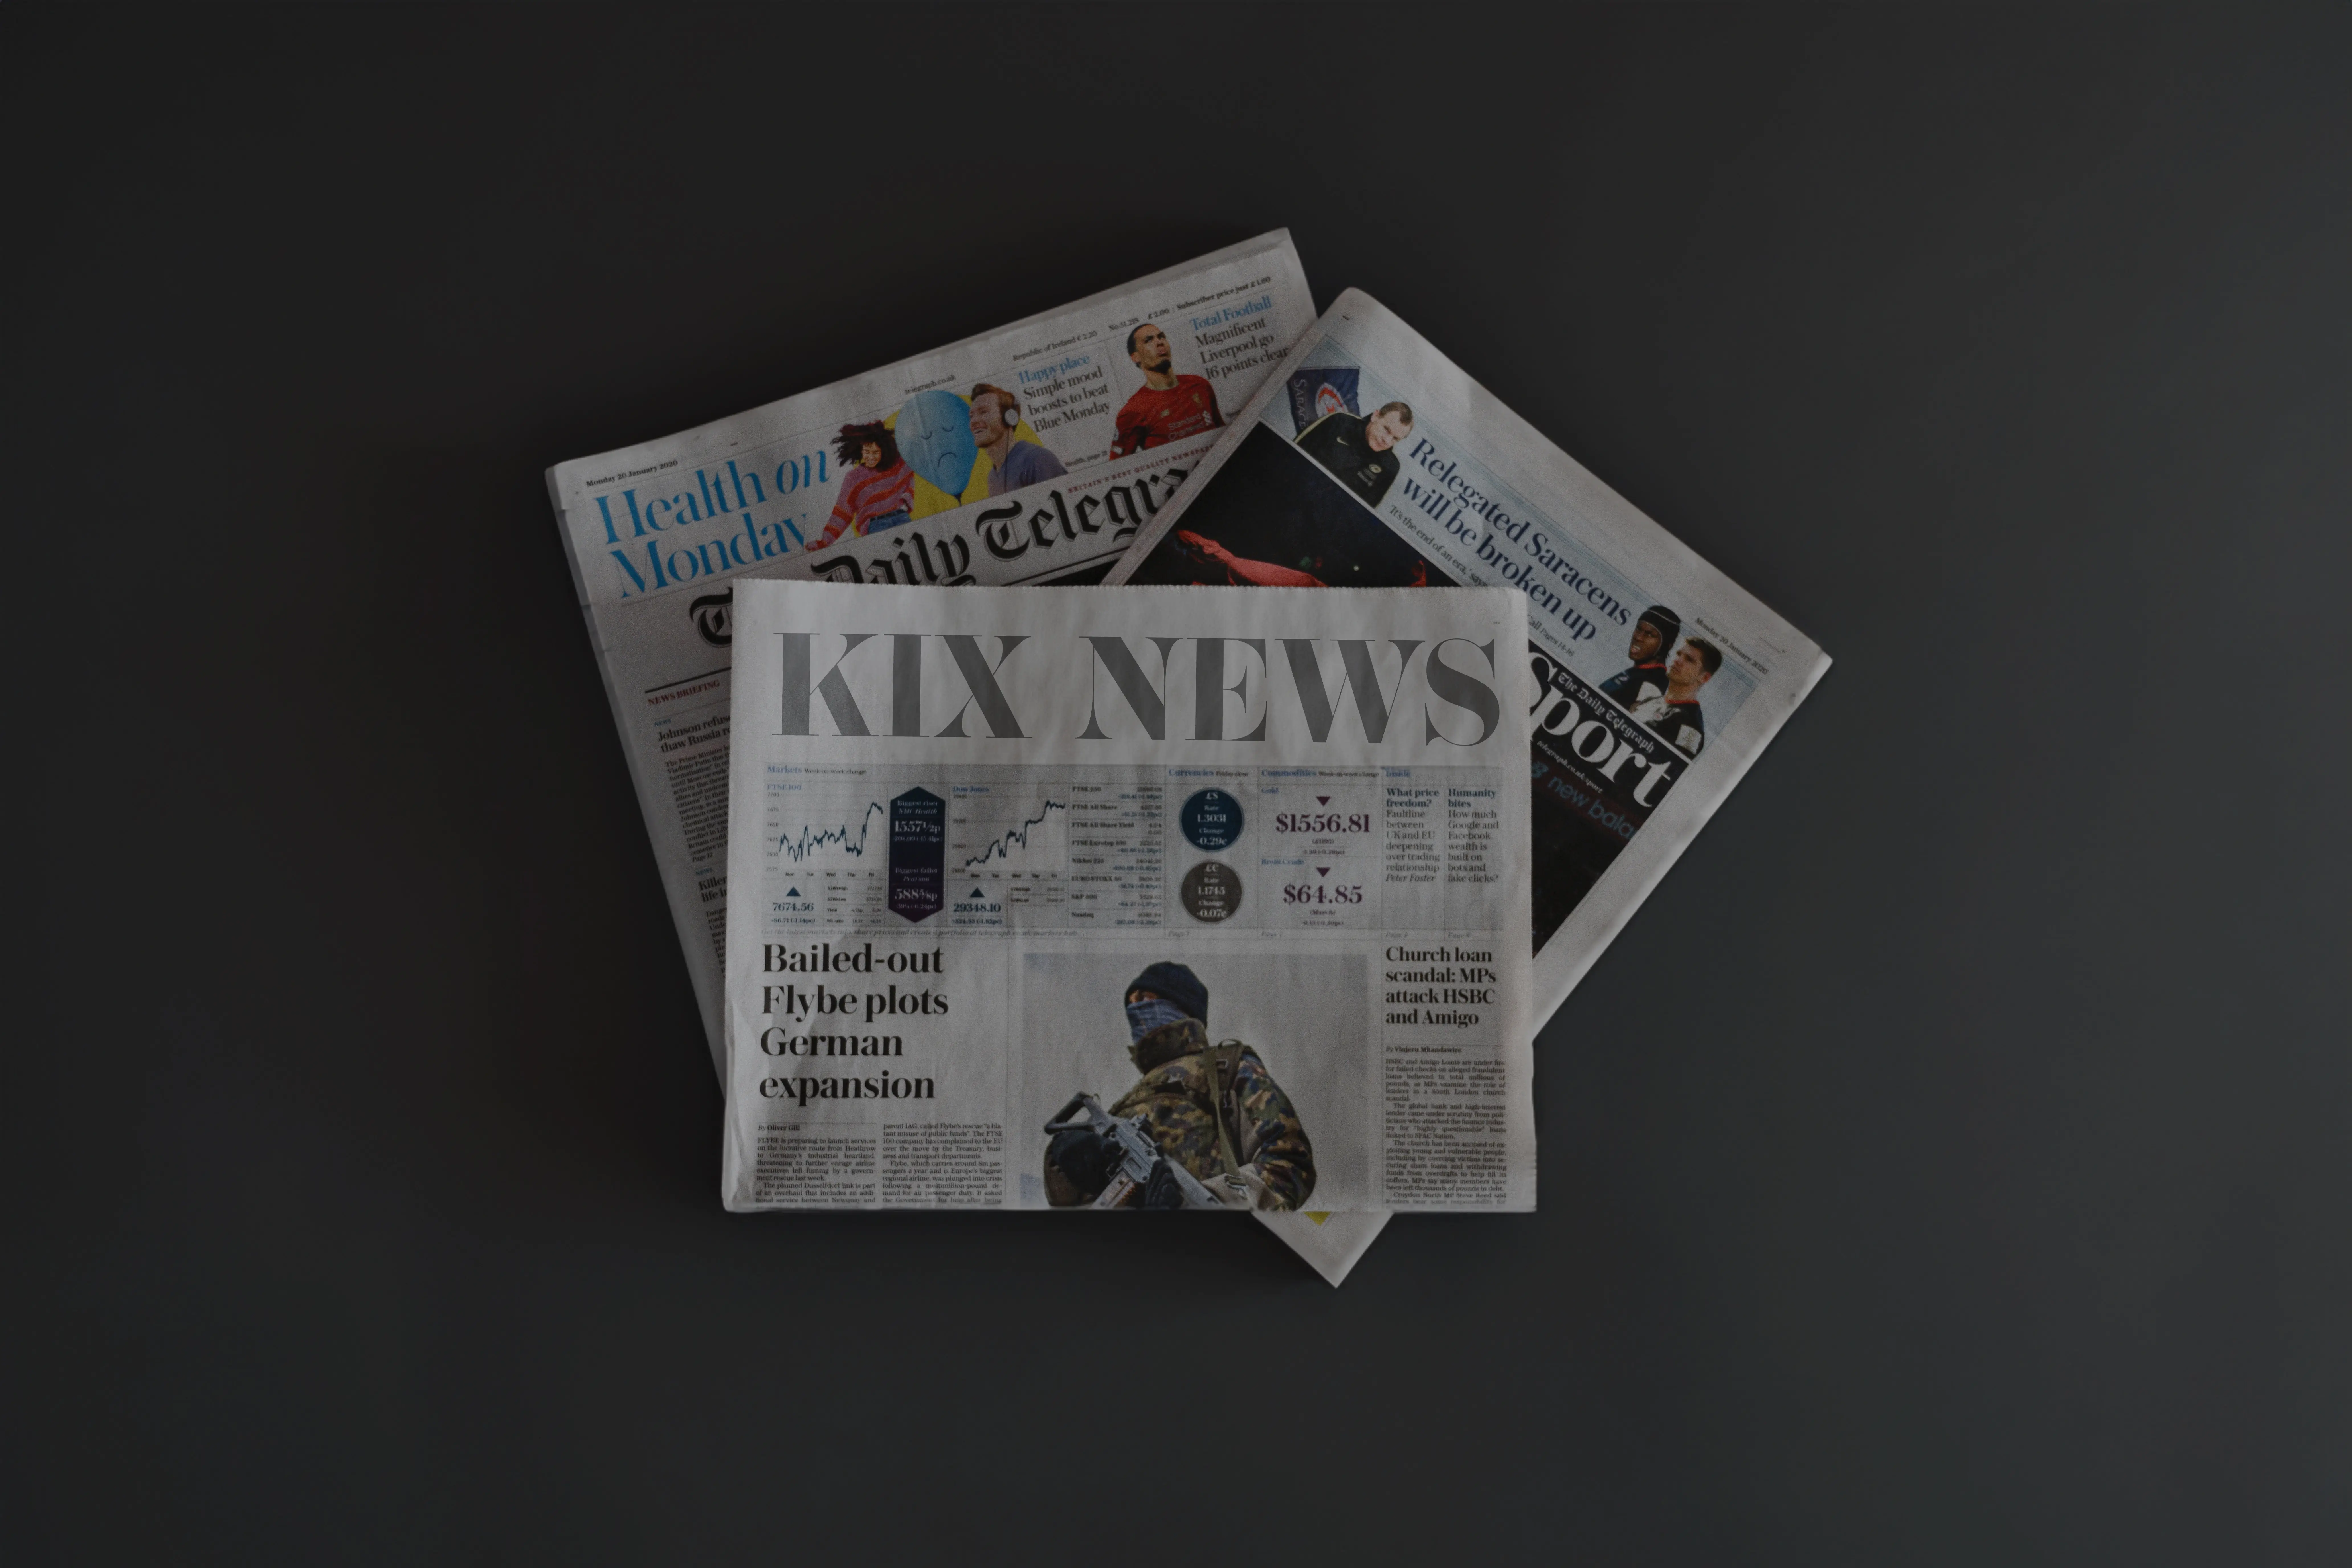 Kixnews image in webp format